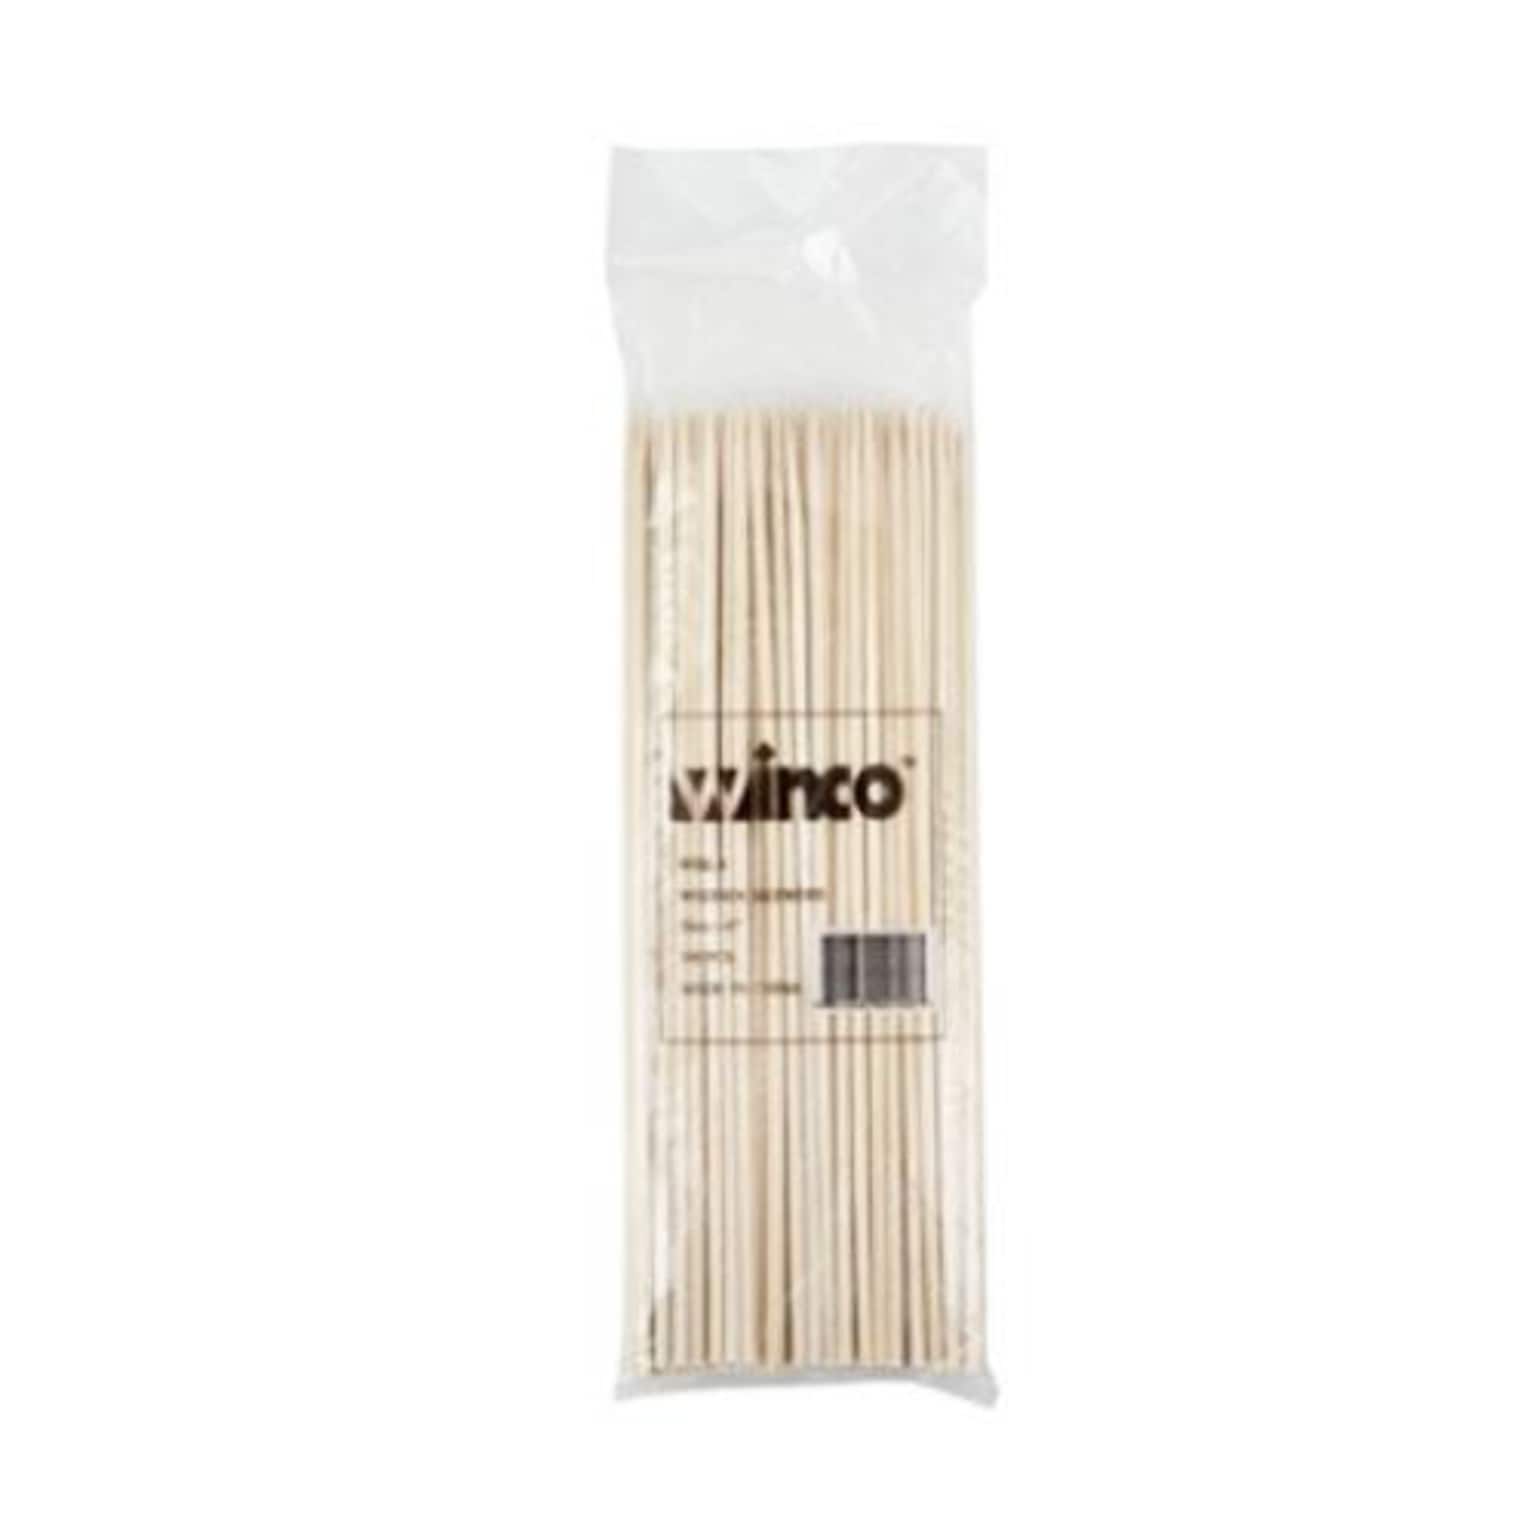 Winco 8 Bamboo Skewer, 100/Carton (WSK-08)